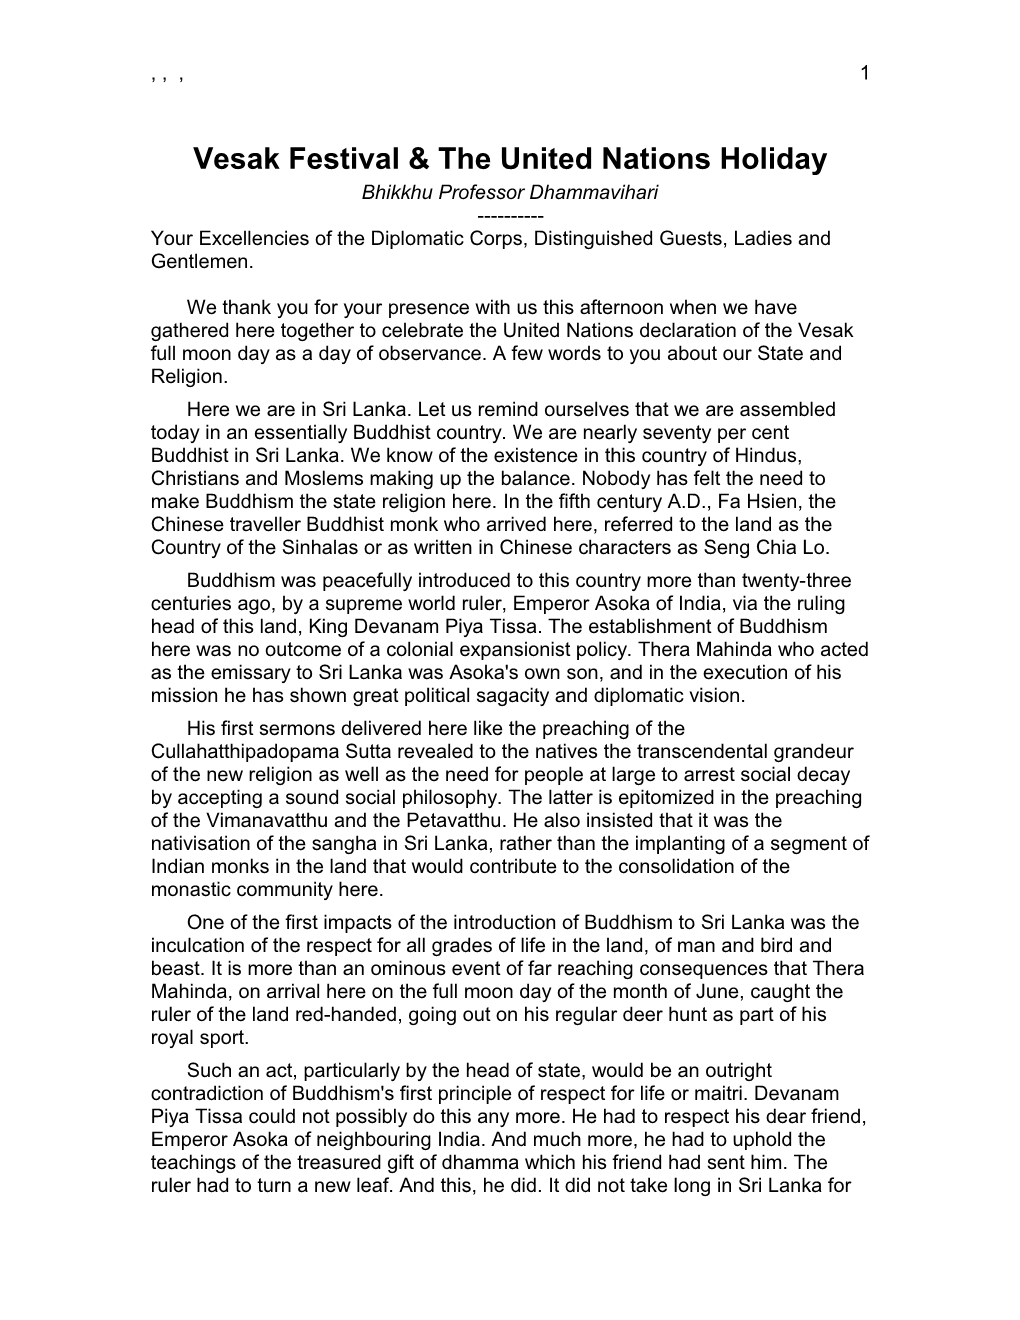 Vesak Festival & the United Nations Holiday